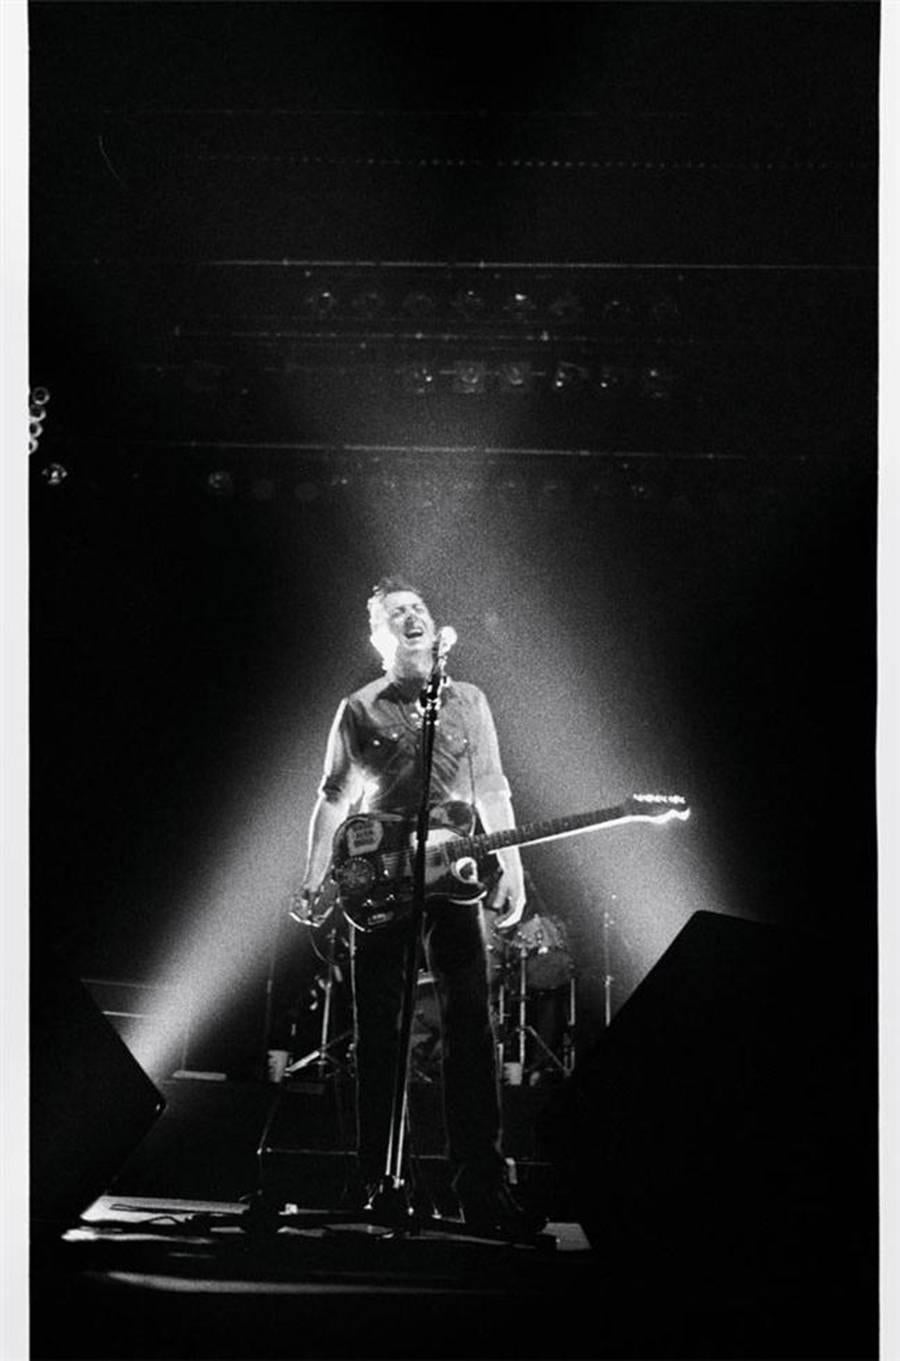 Josh Cheuse Black and White Photograph - Joe Strummer on Stage